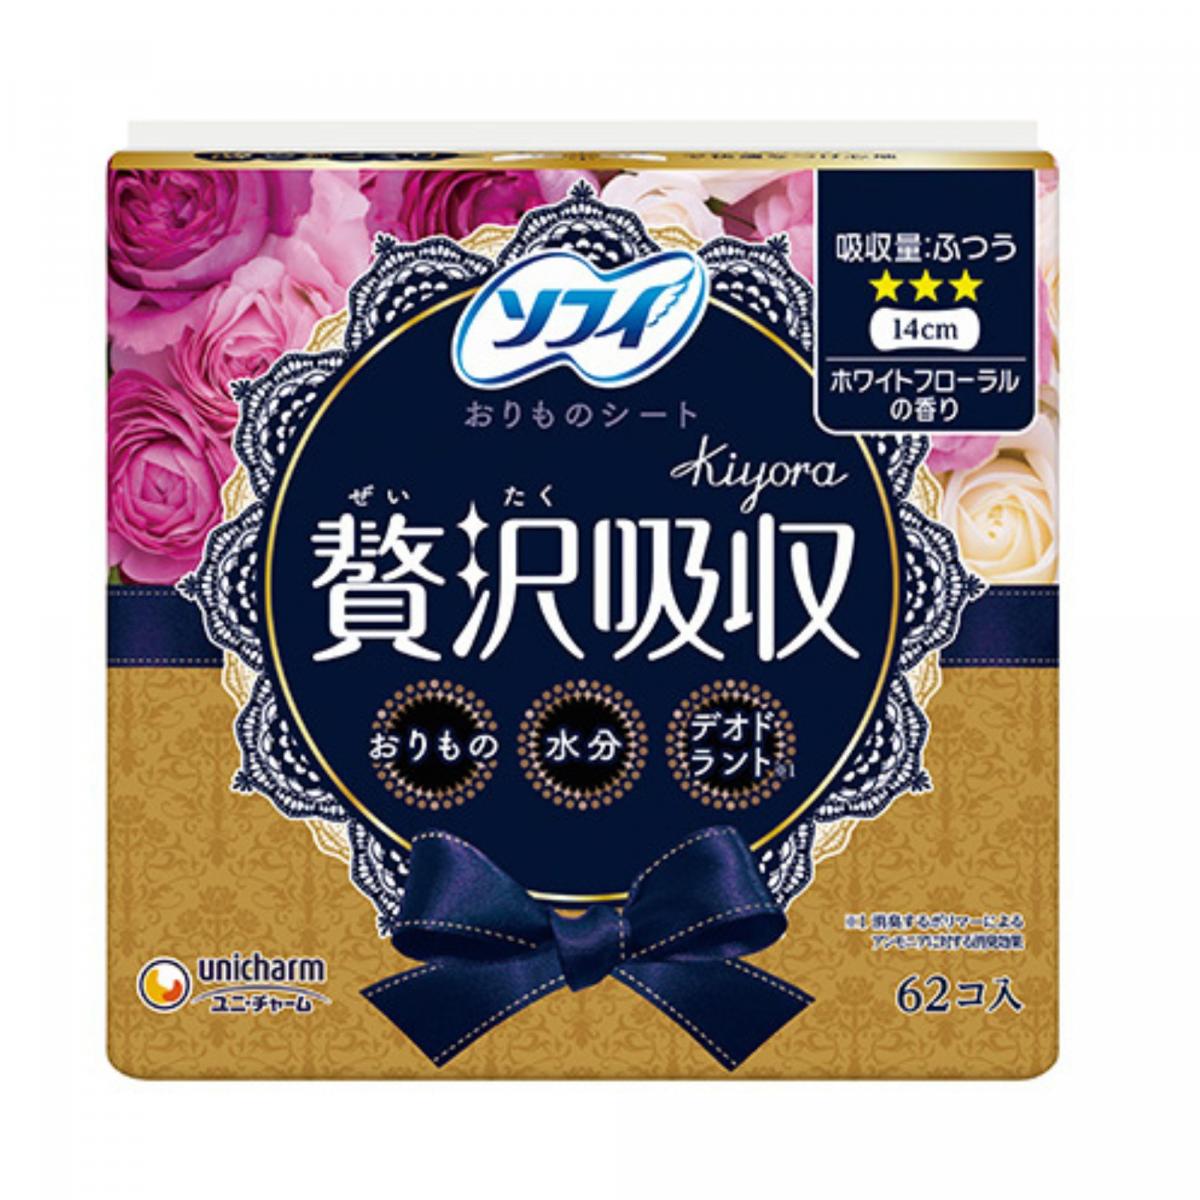 Sofy kiyora Luxury Absorption Ag panty liner White floral fragrance (62 pcs)  [Parallel Import good]